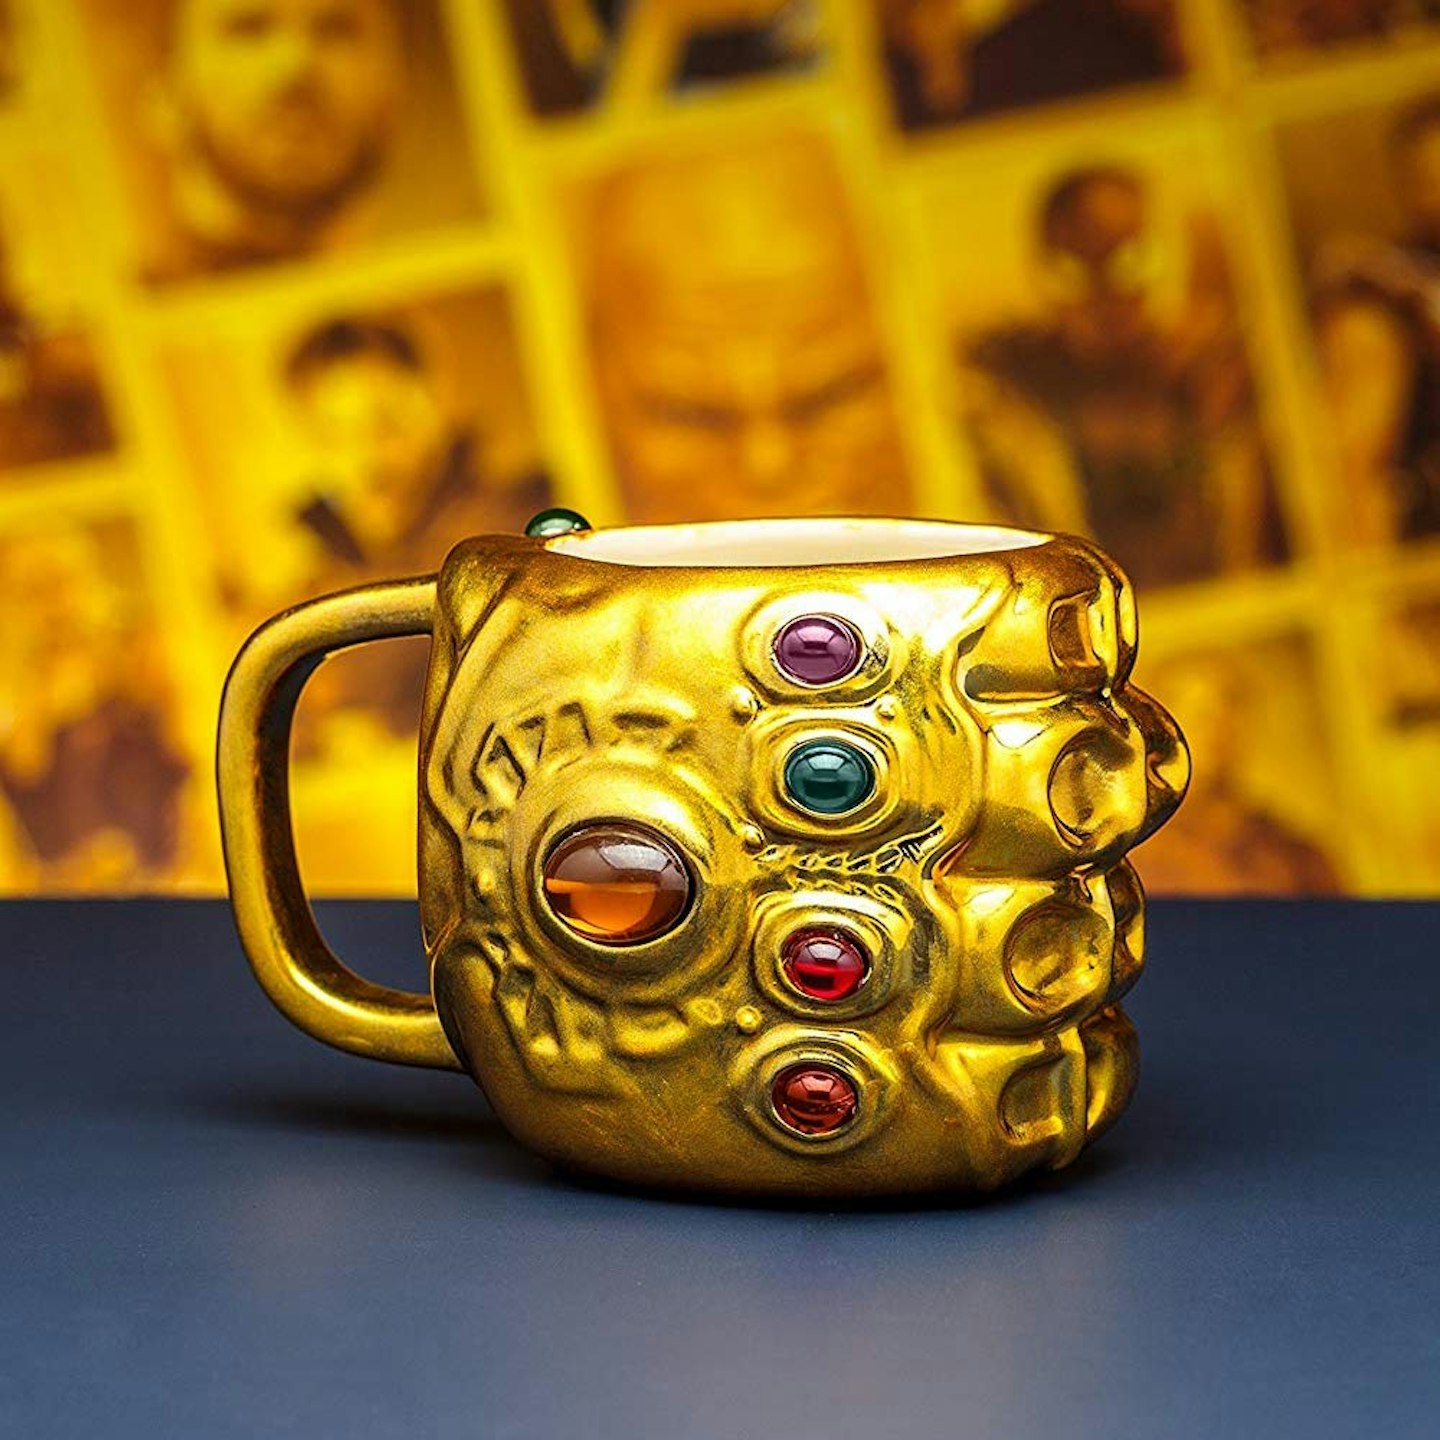 Marvel Avengers Infinity War Gauntlet Shaped Mug & Infinity Stones, £11.99